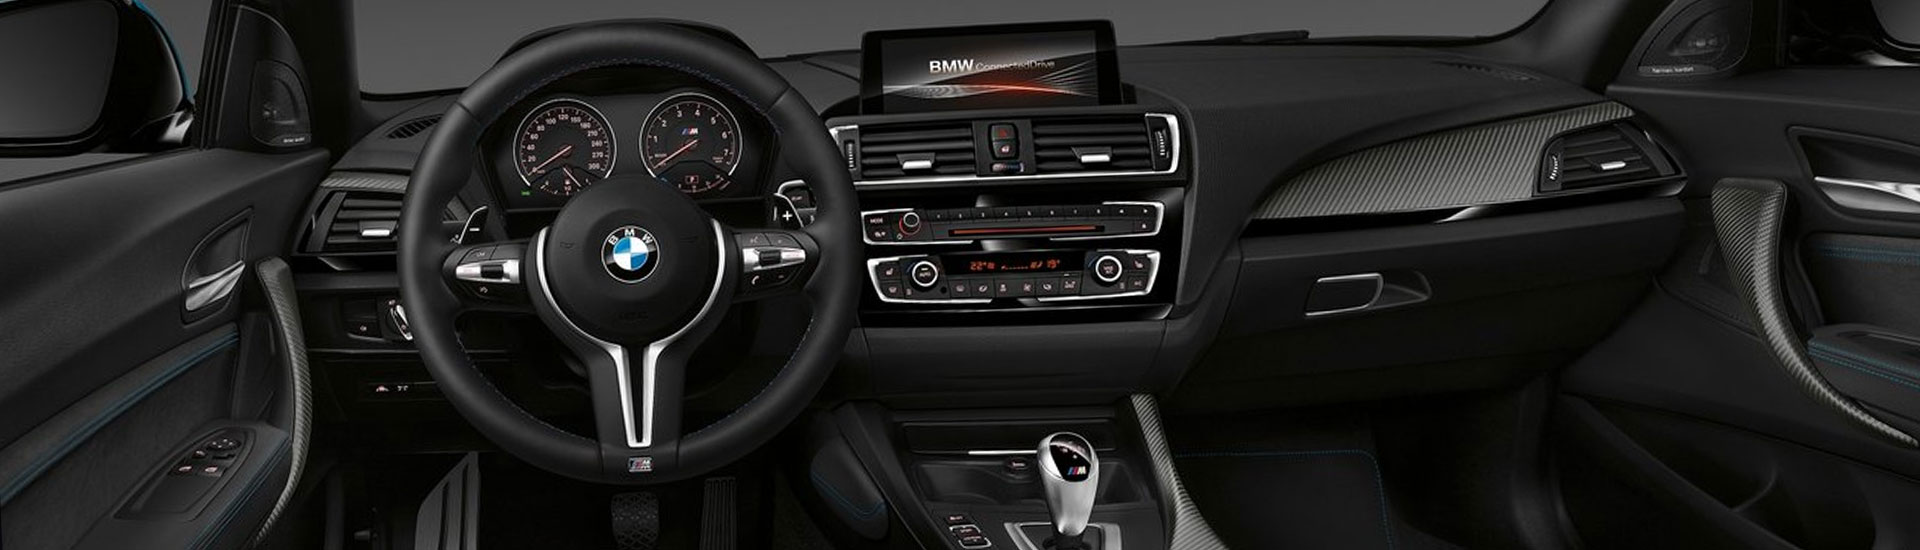 BMW 2-Series Custom Dash Kits